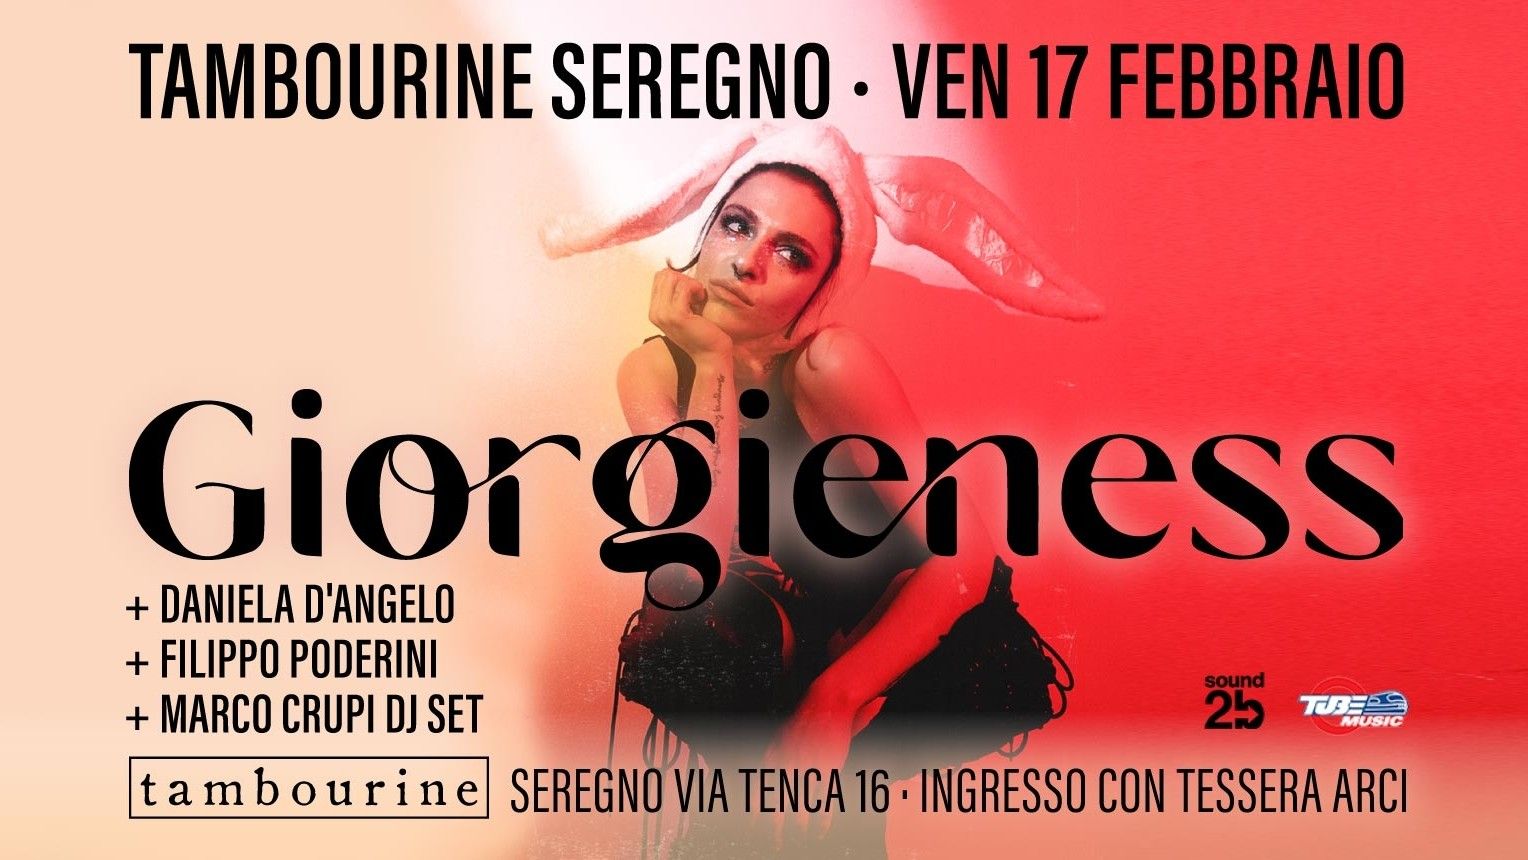 Giorgieness+ Filippo Poderini + Daniela d’Angelo + Marco Crupi Dj set